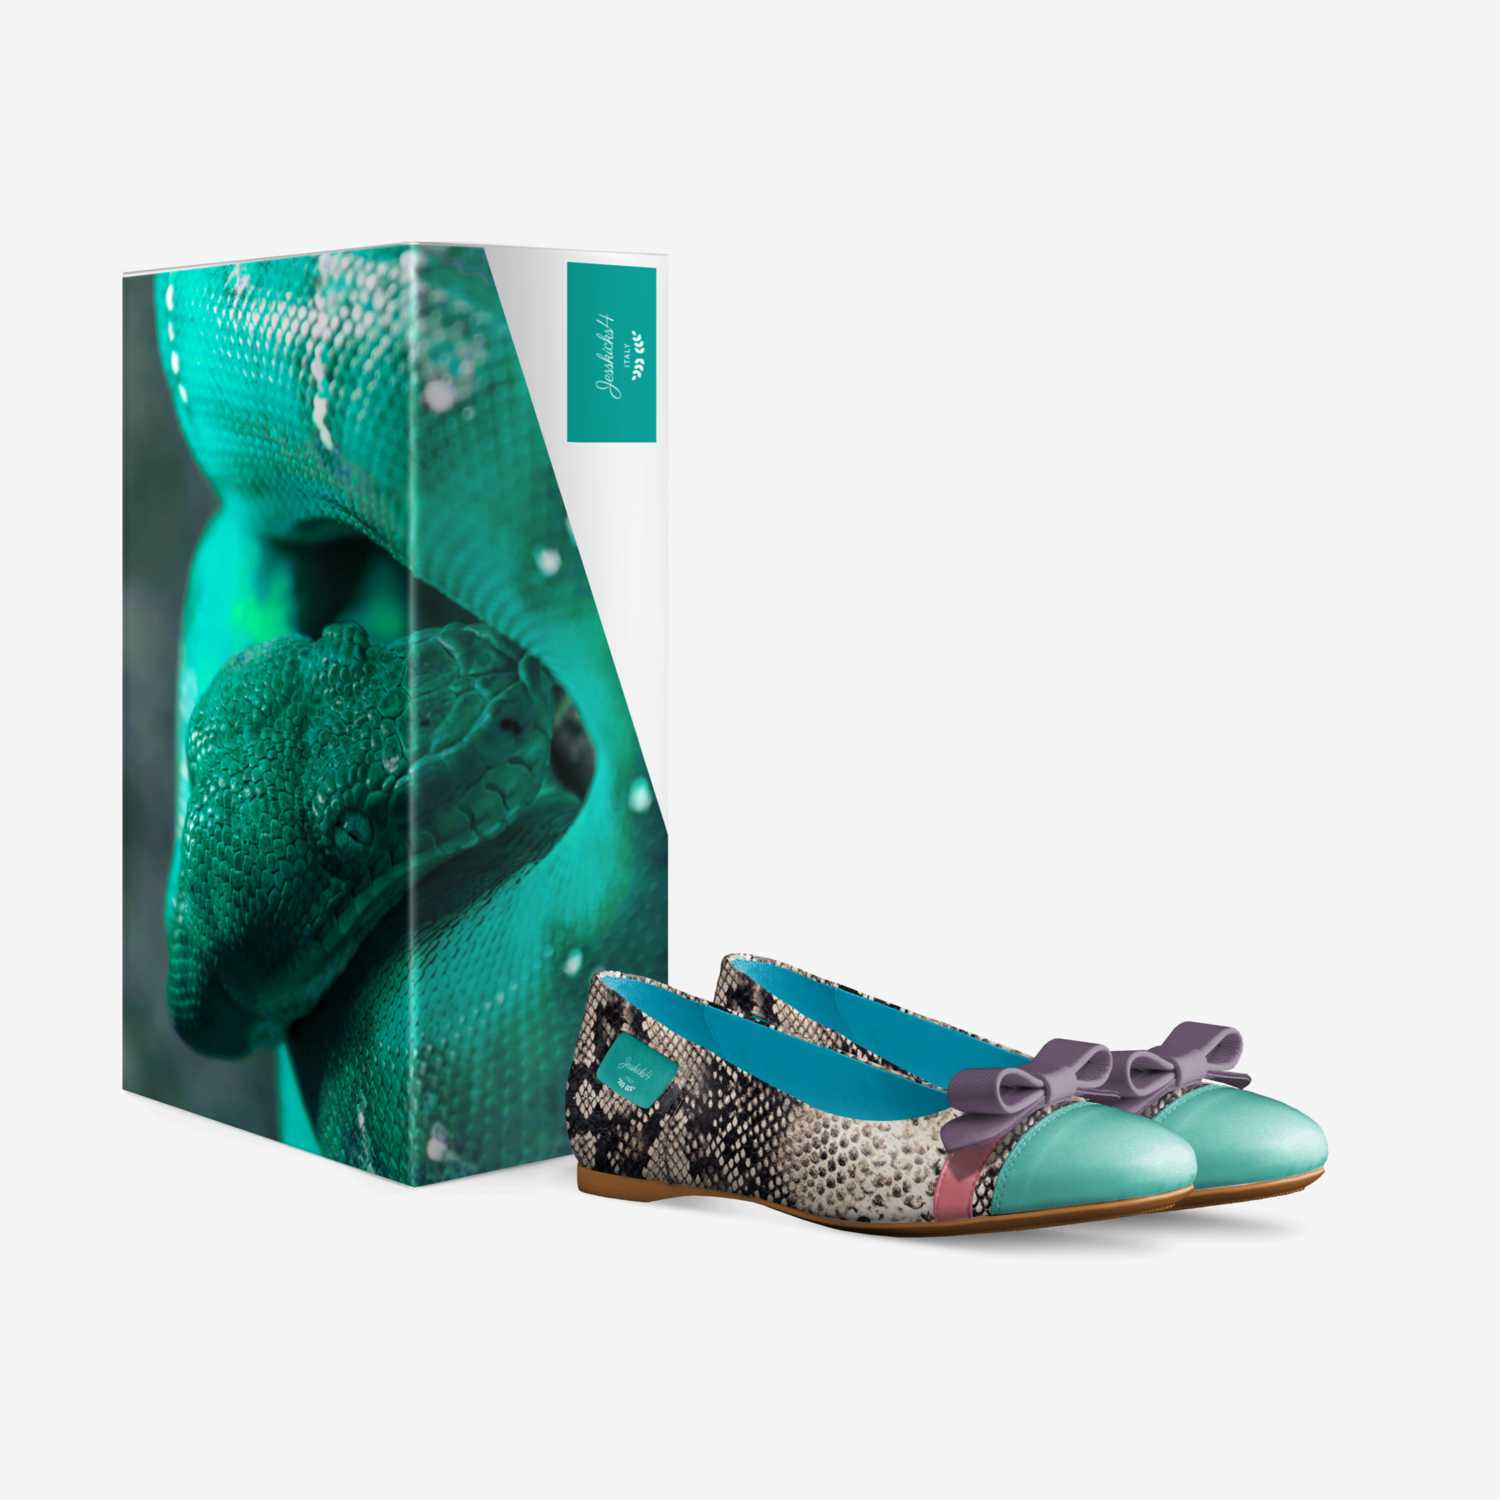 Jesskicks4 custom made in Italy shoes by Jessica Burton | Box view